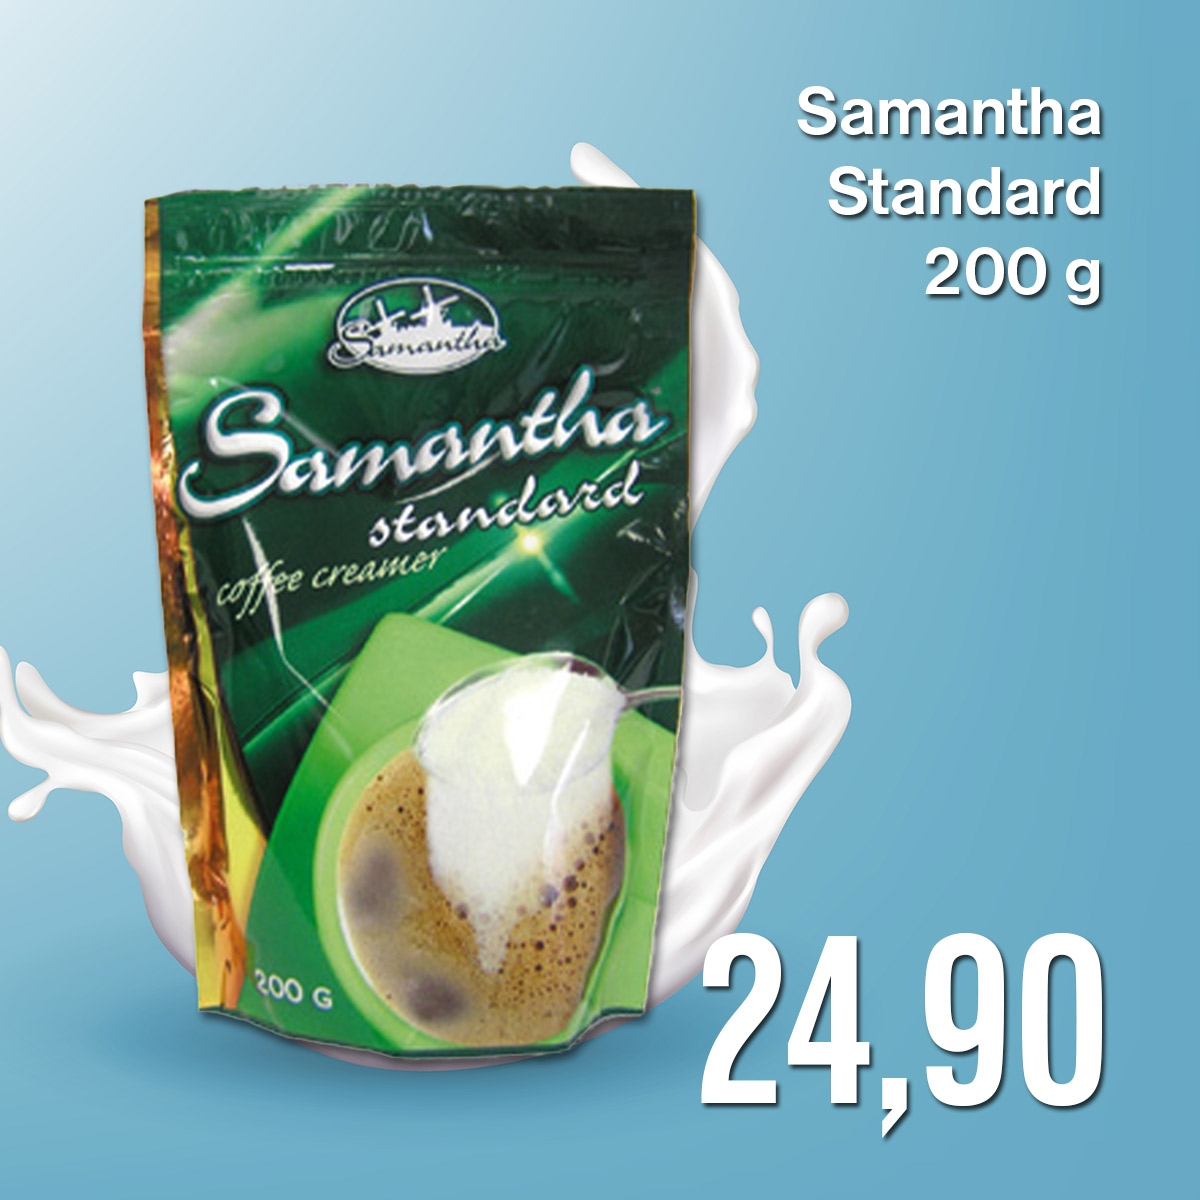 Samantha Standard 200 g